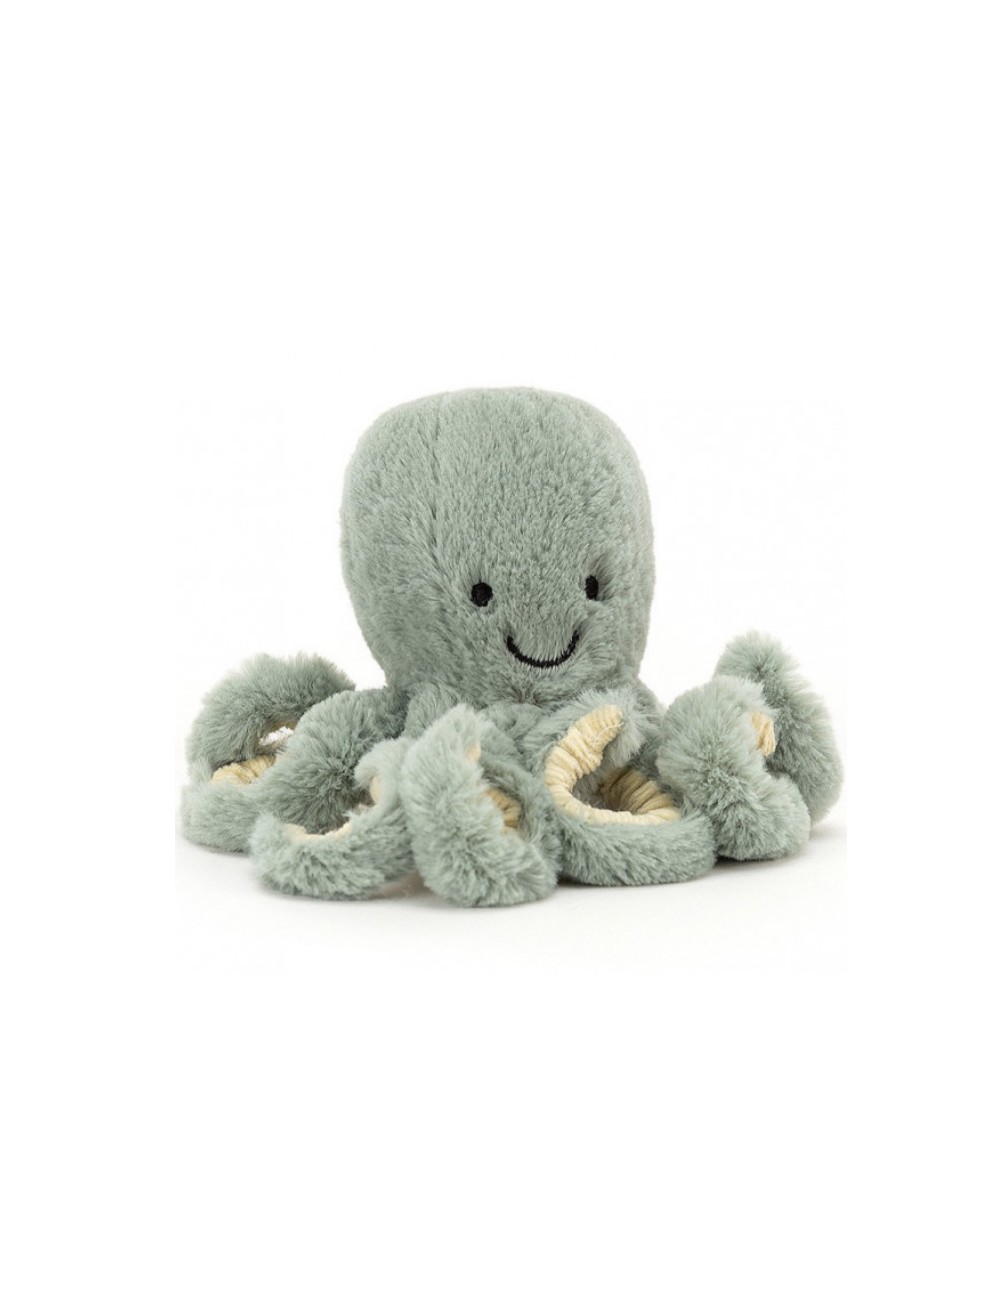 Odyssey octopus baby